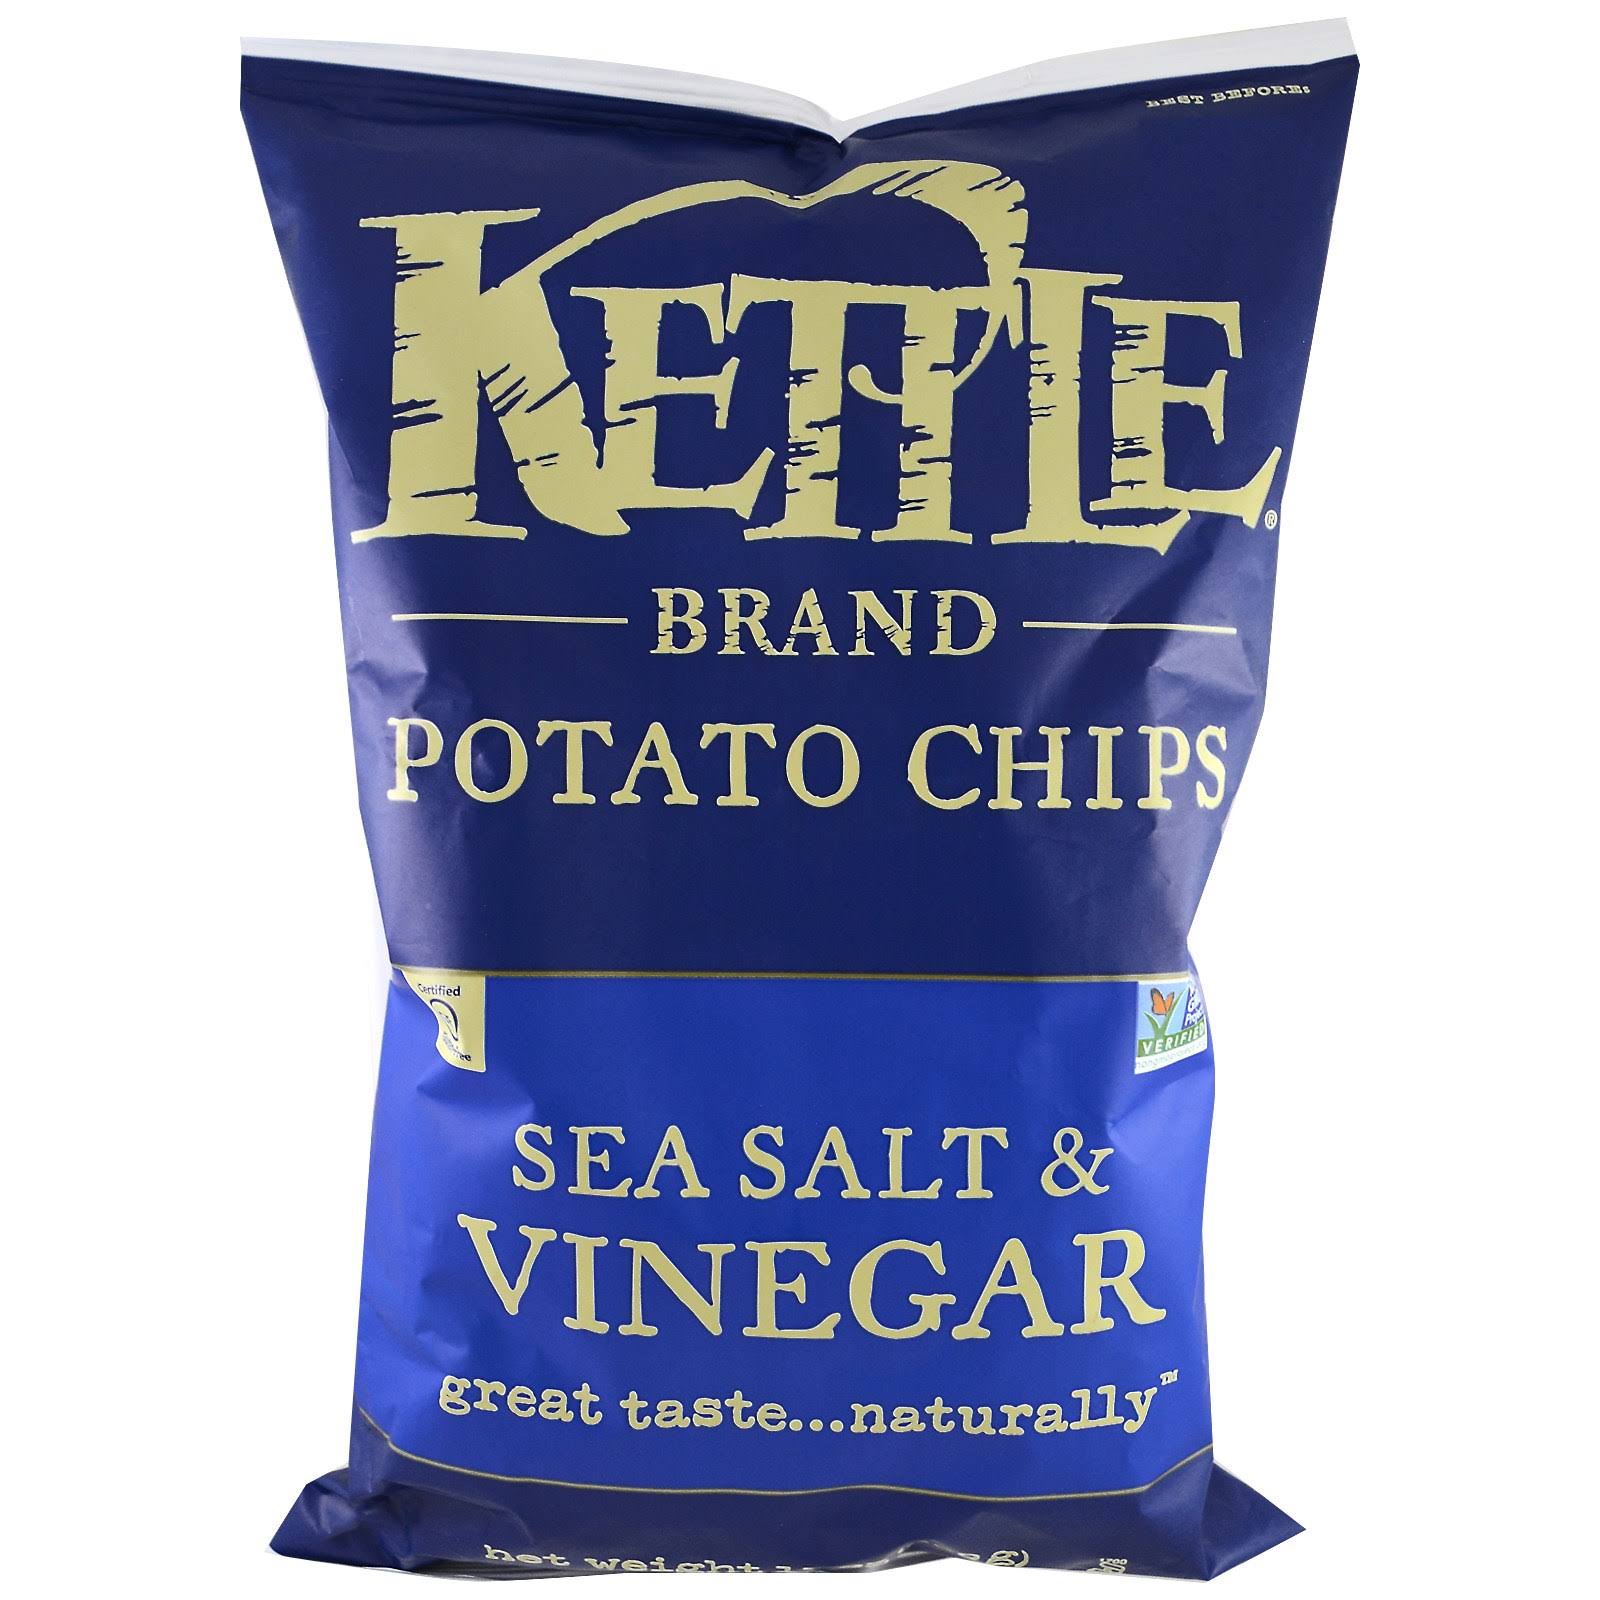 Kettle Brand Potato Chips - Sea Salt and Vinegar, 13oz